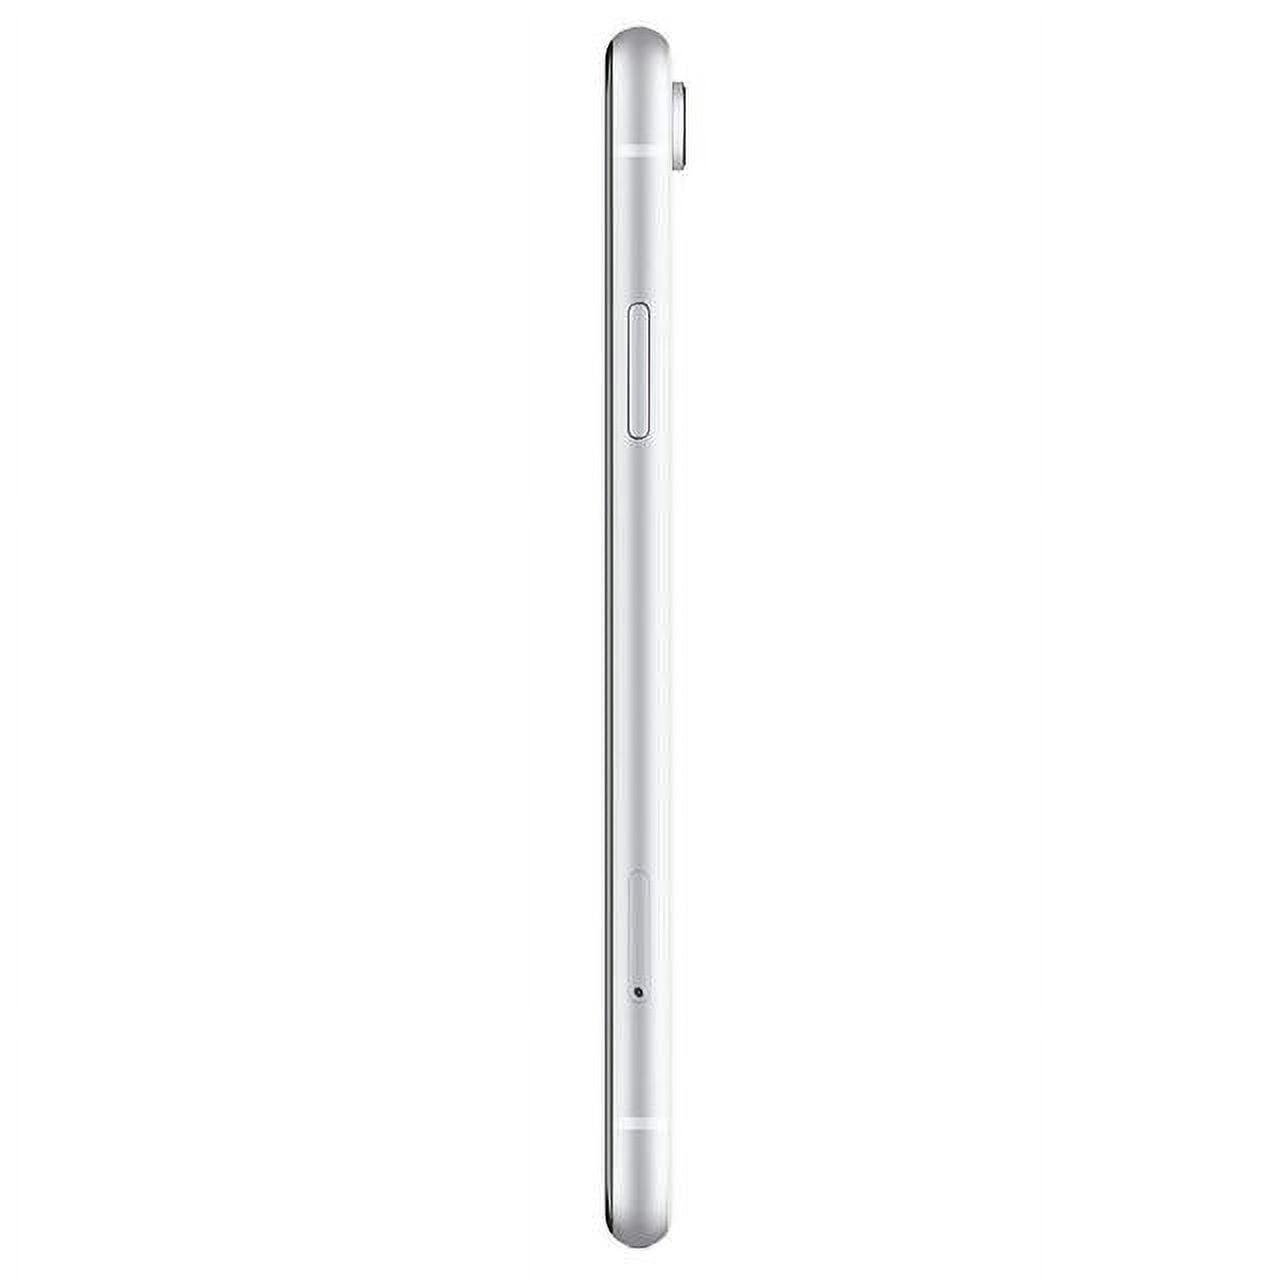 Apple iPhone XR 128GB Blanco - Smartphone